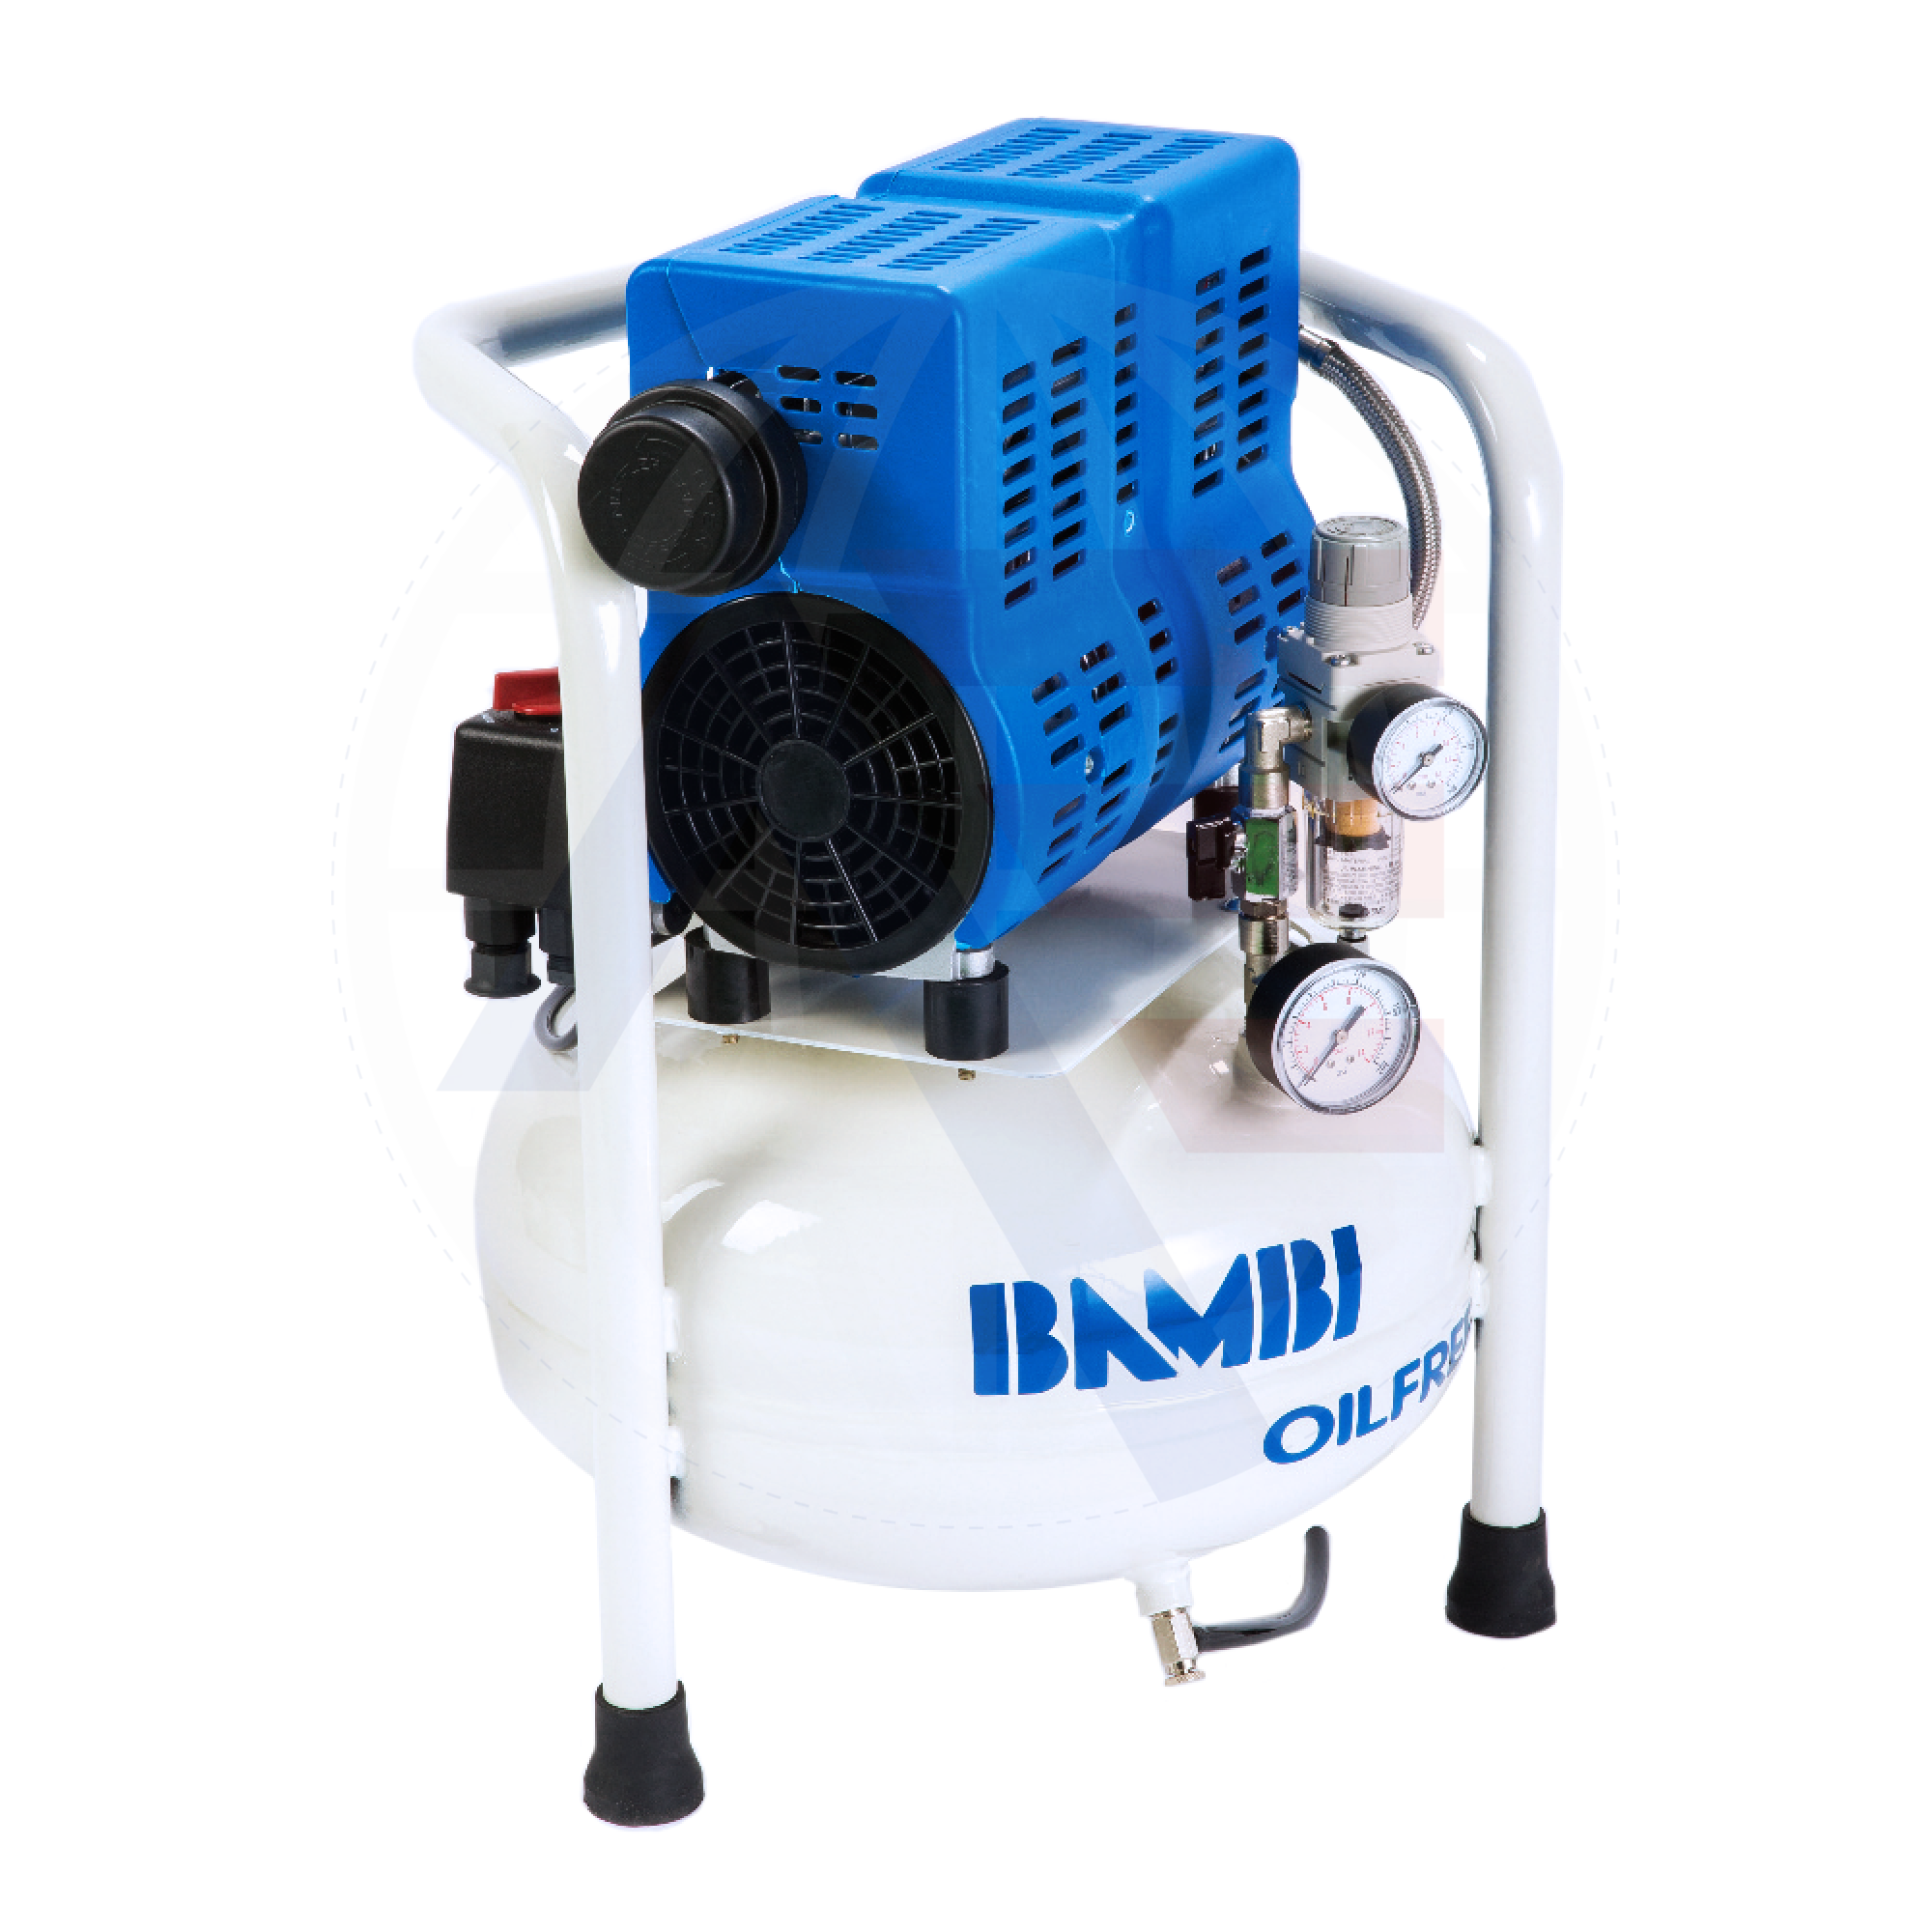 Bambi Pt15 Oil-Free Air Compressor Compressors